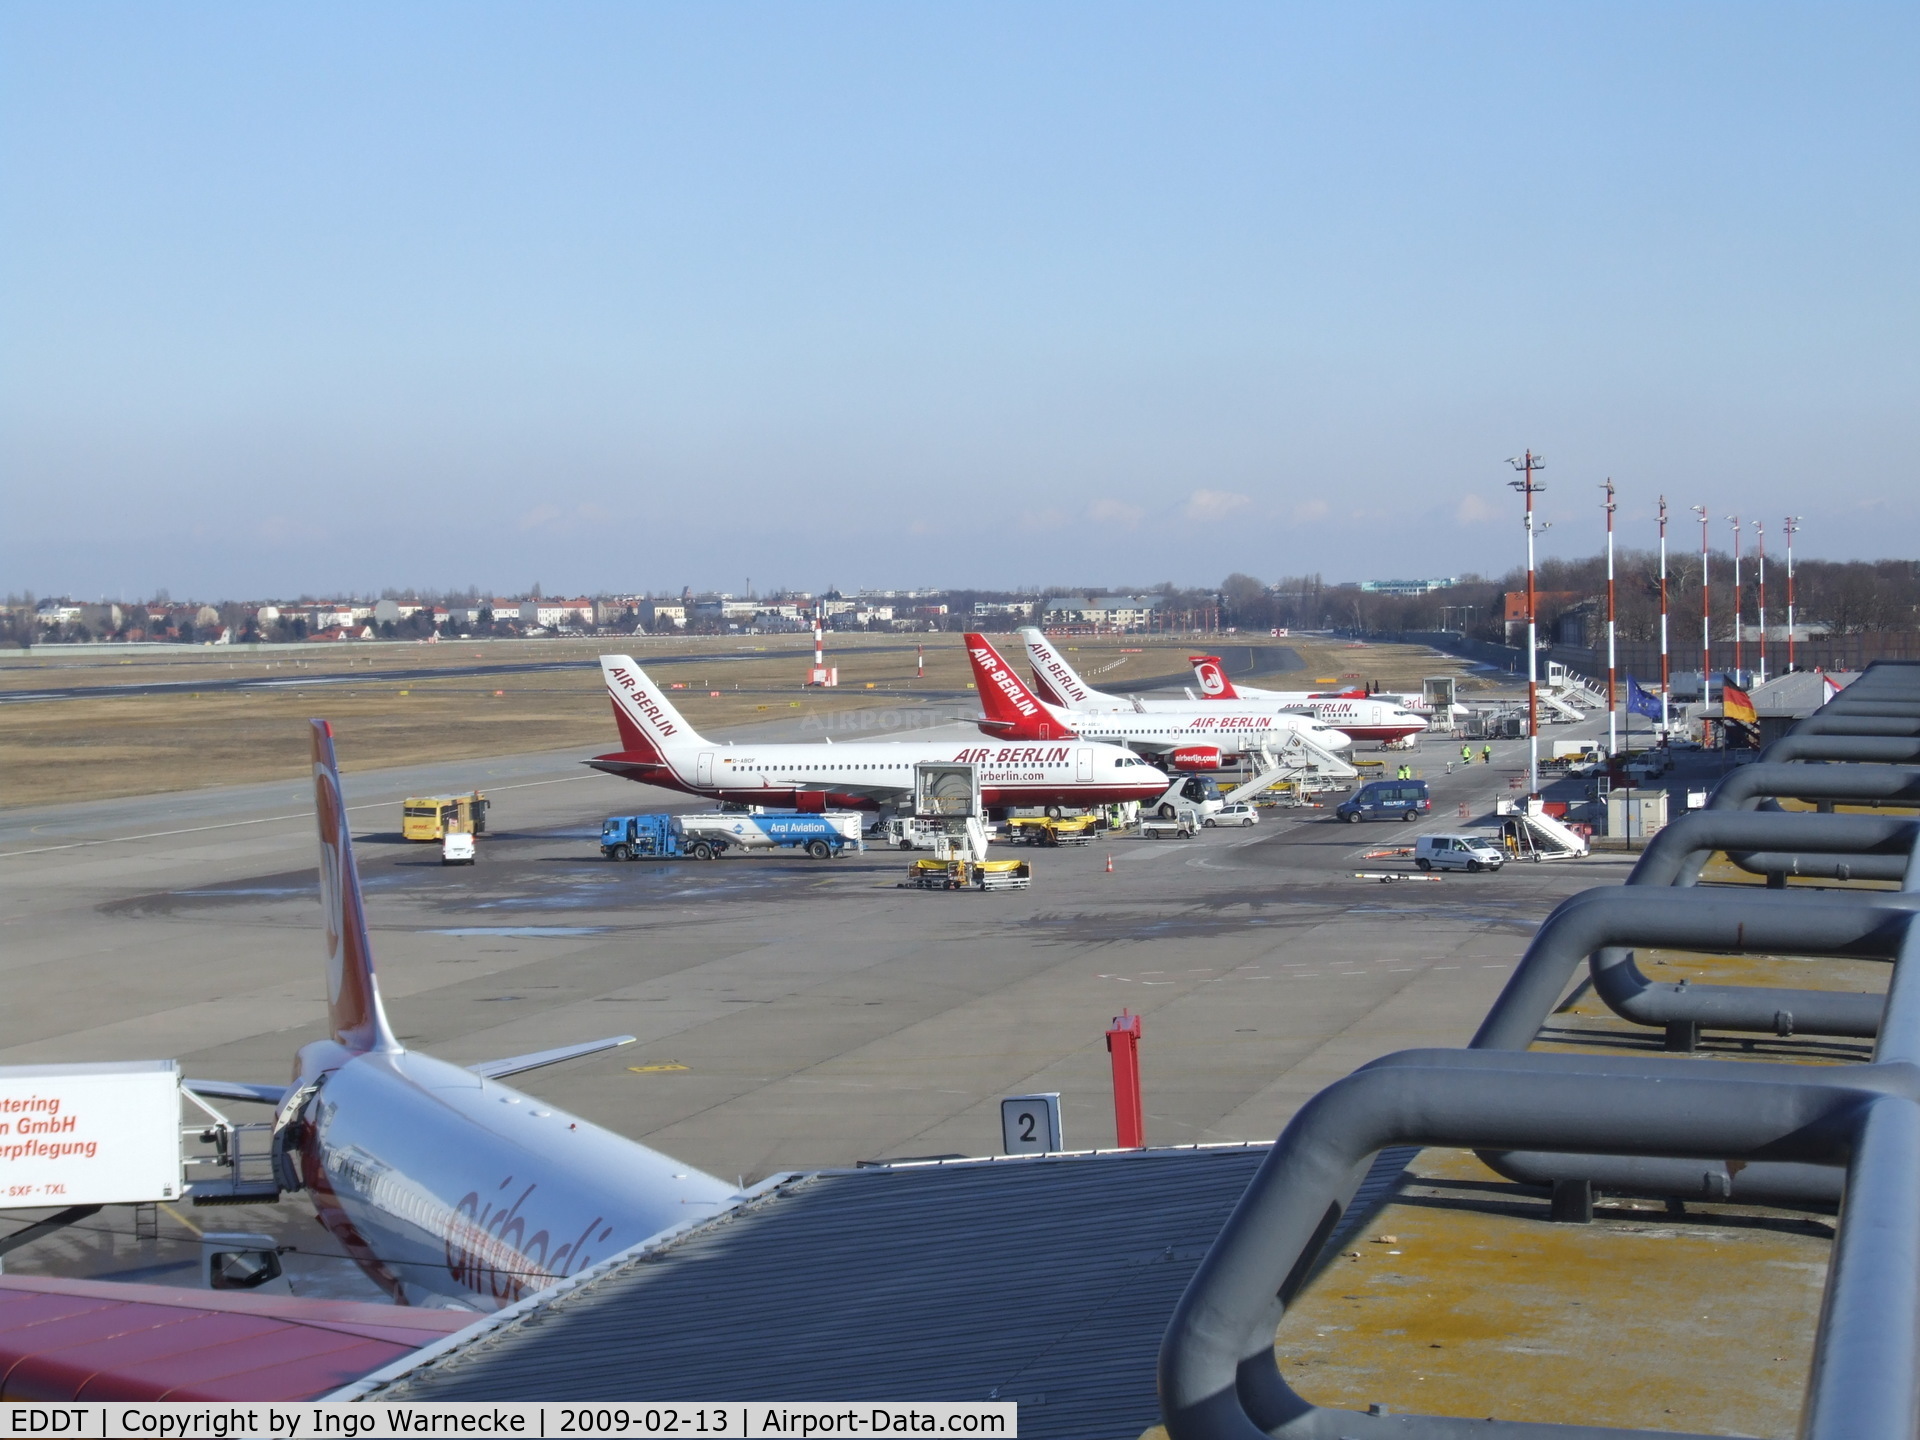 Tegel International Airport (closing in 2011), Berlin Germany (EDDT) - Berlin Tegel, aircraft at the eastern apron